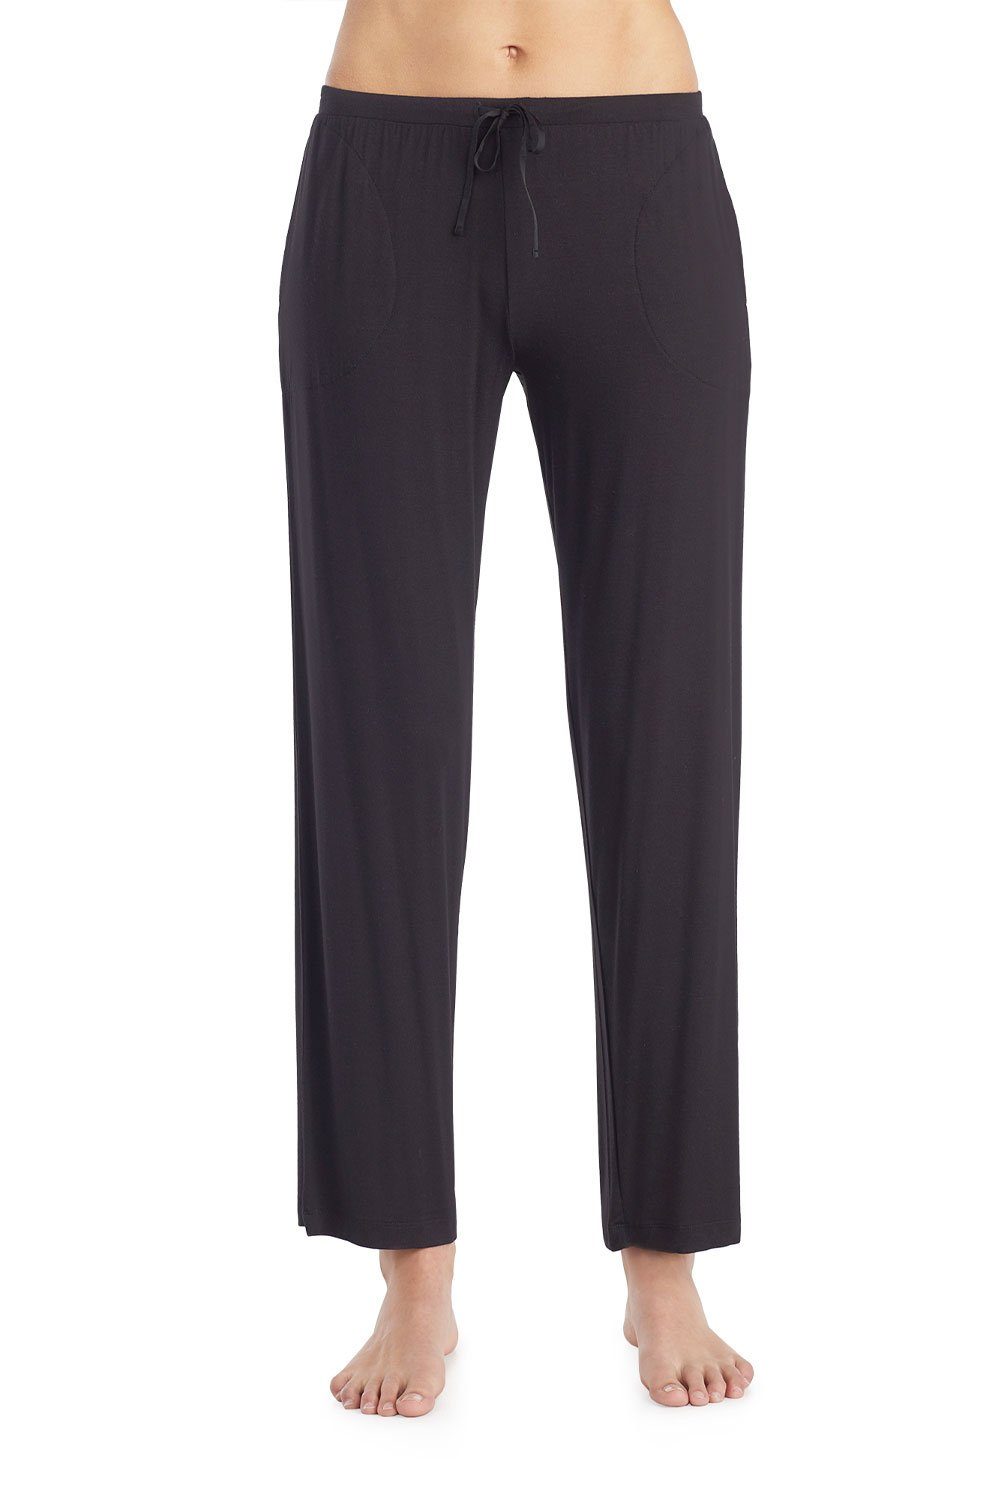 DKNY Loungehose Pant Essentials YI2719330 black